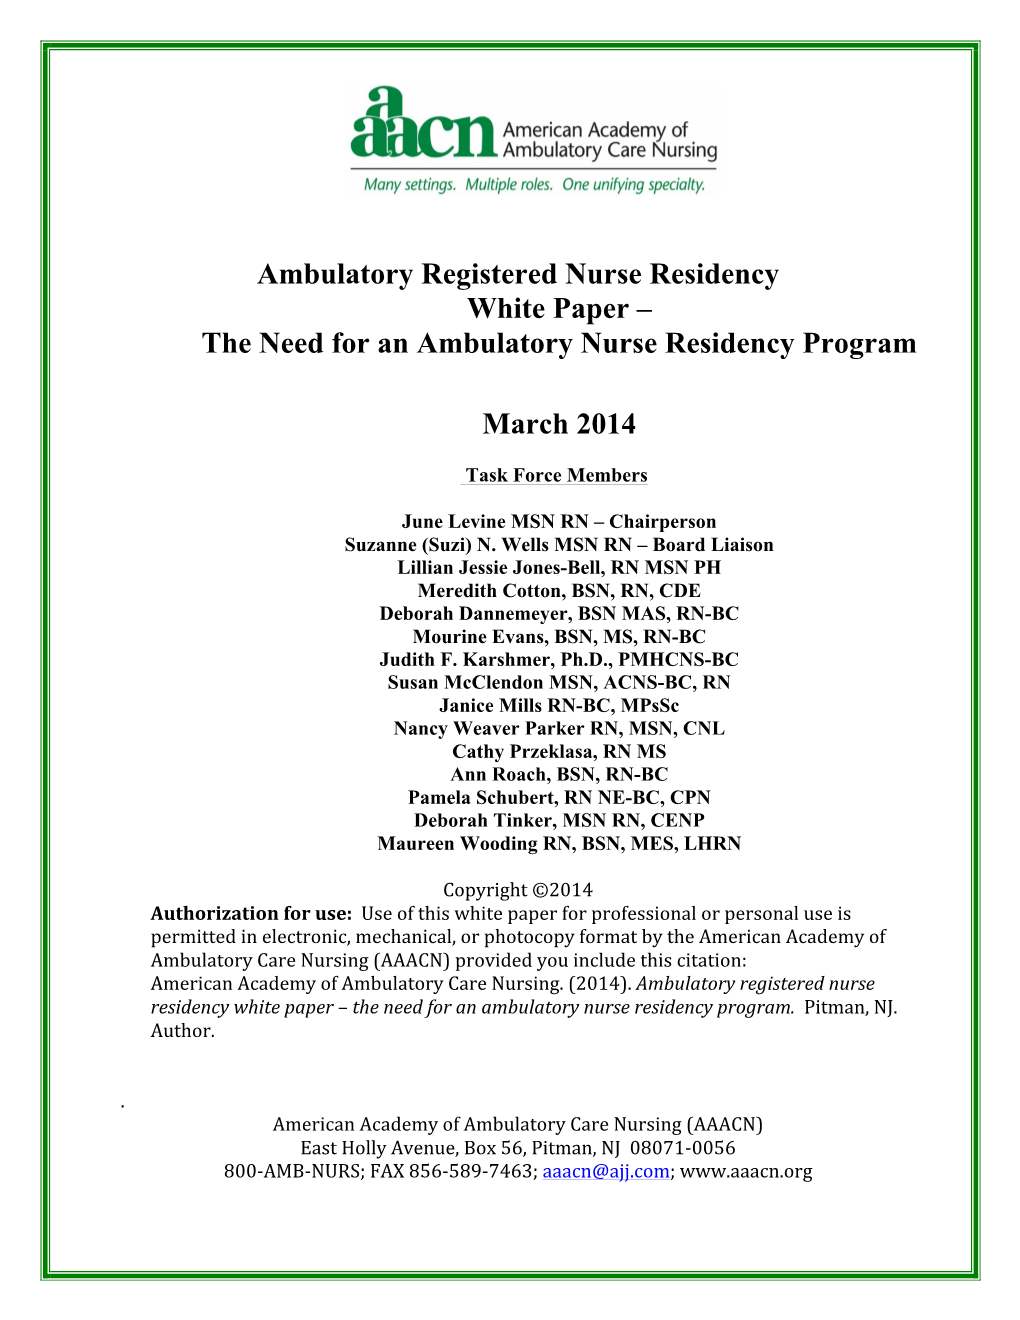 Ambulatory Registered Nurse Residency White Paper – the Need for an Ambulatory Nurse Residency Program